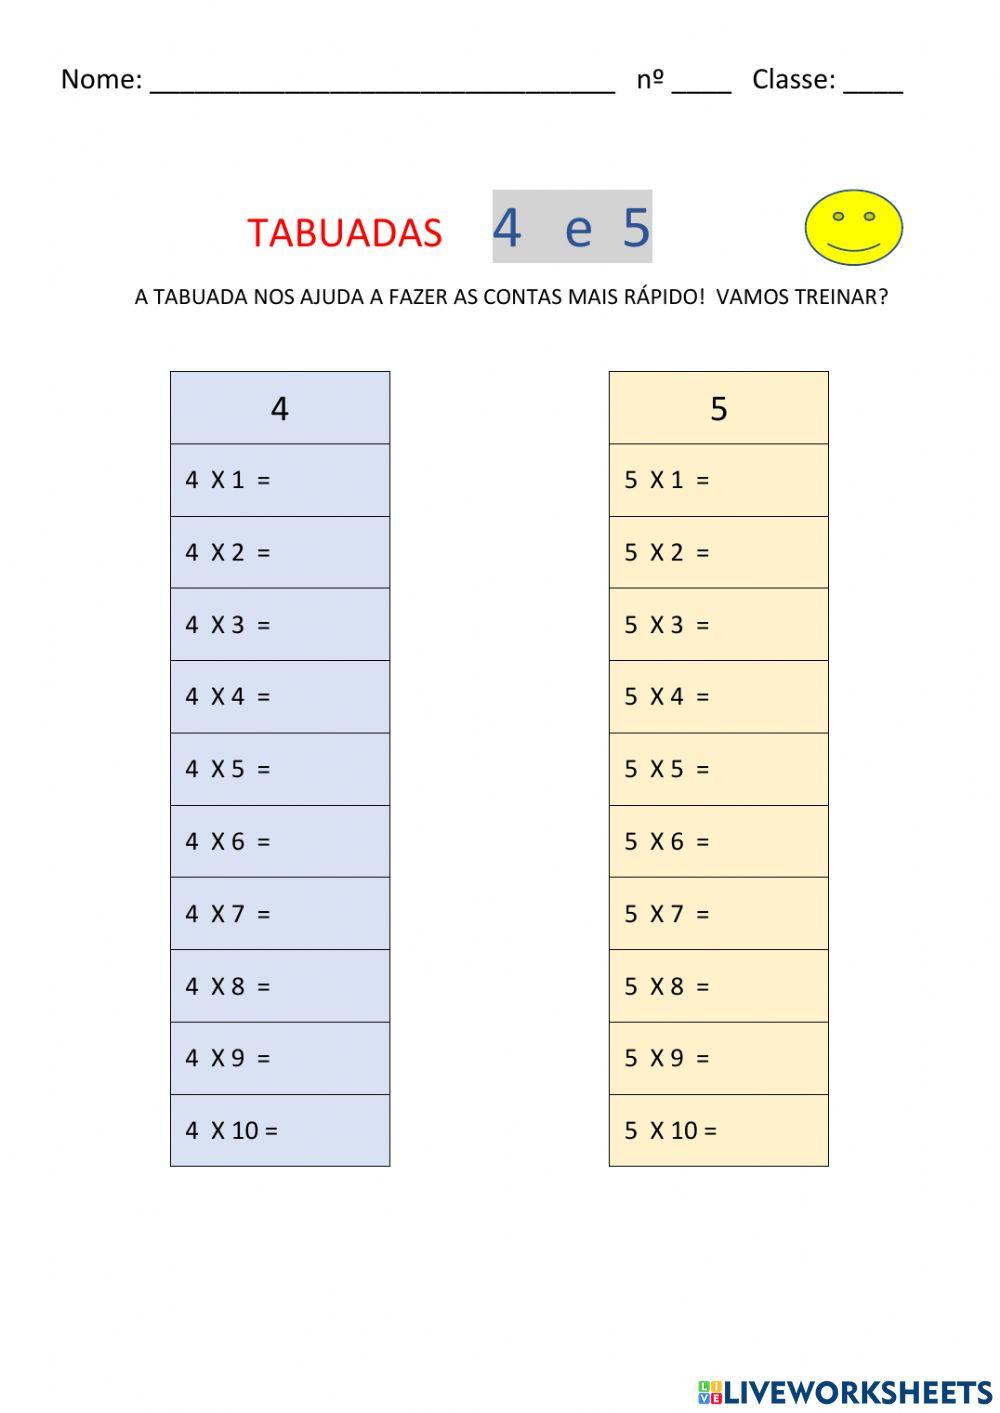 Tabuada do 4 e 5 interactive worksheet